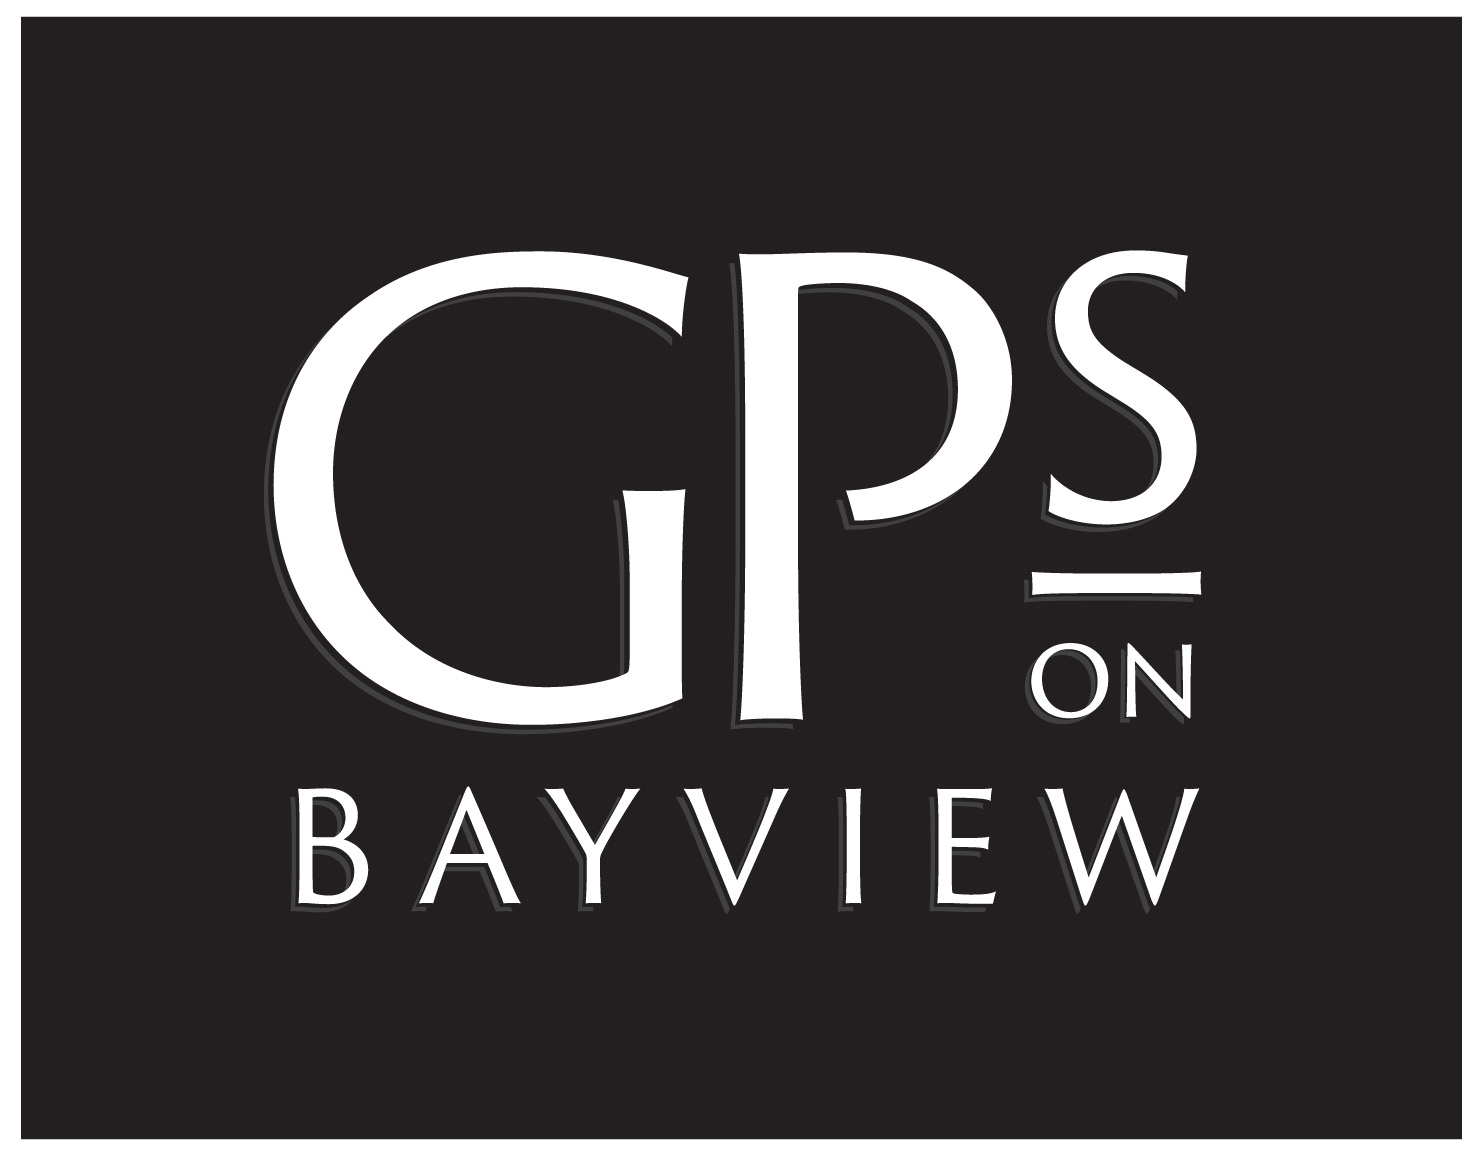 GPs on Bayview